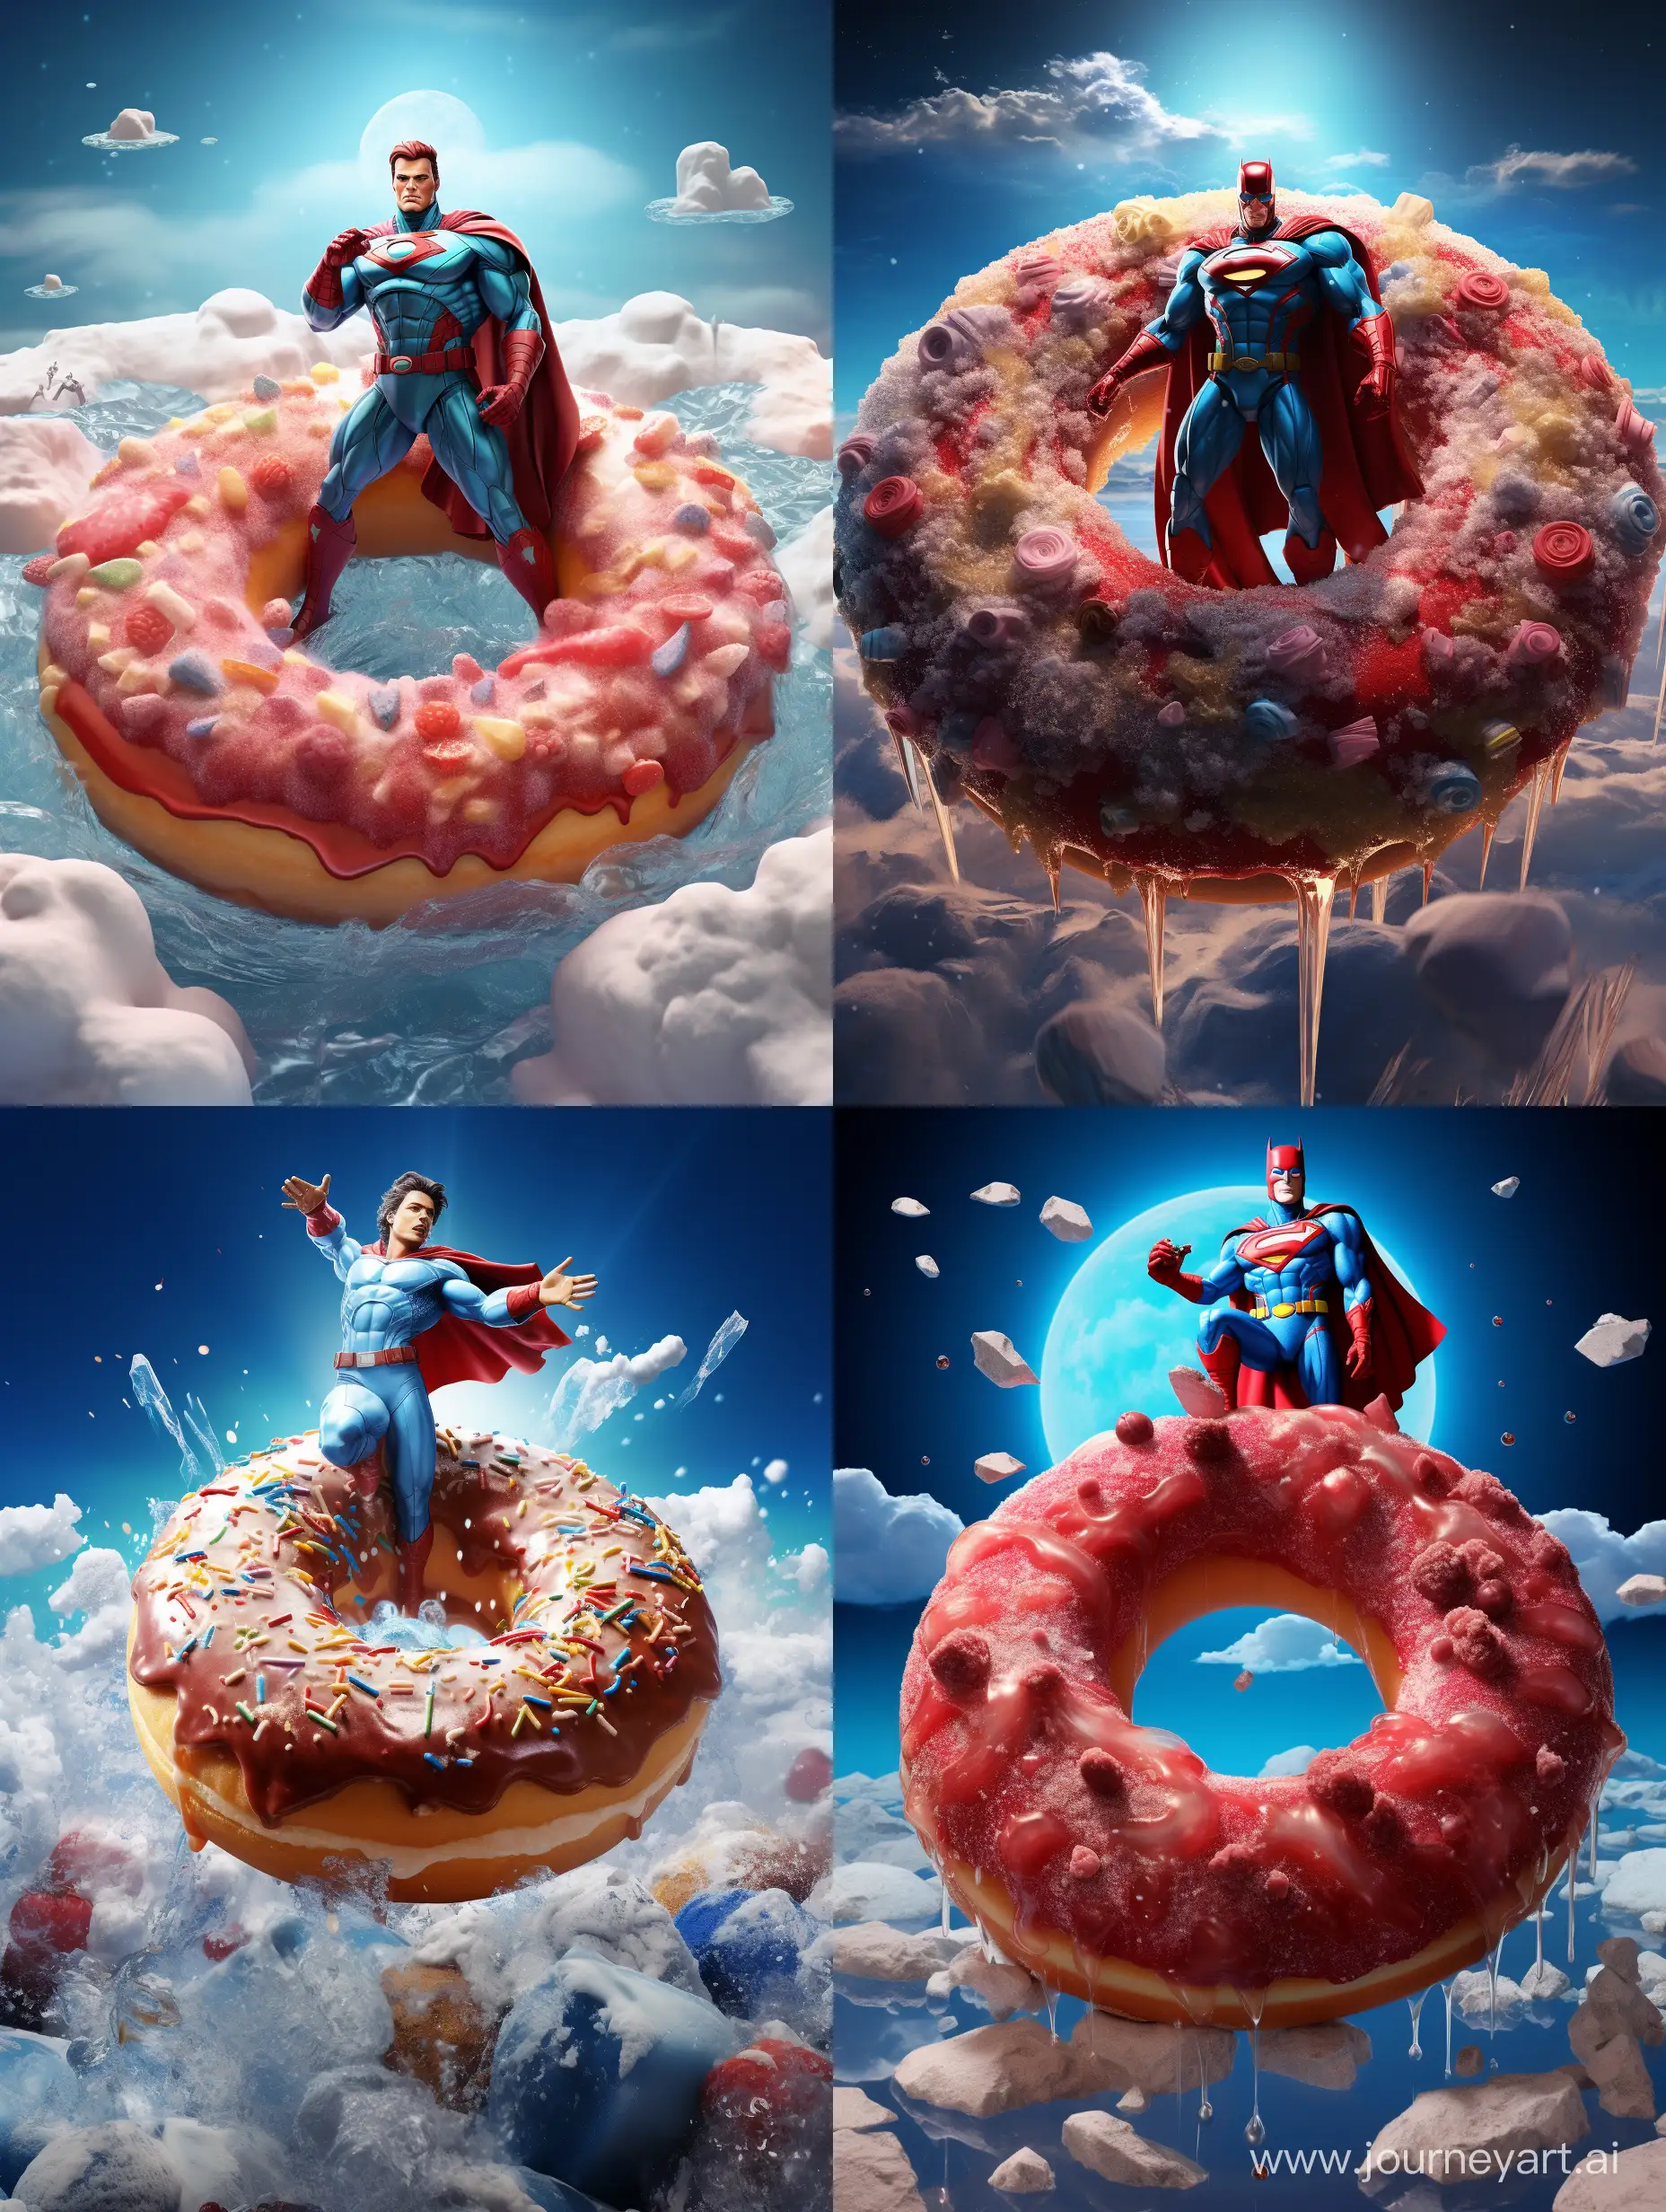 SupermanThemed-Donut-on-Ice-Creative-Dessert-Centerpiece